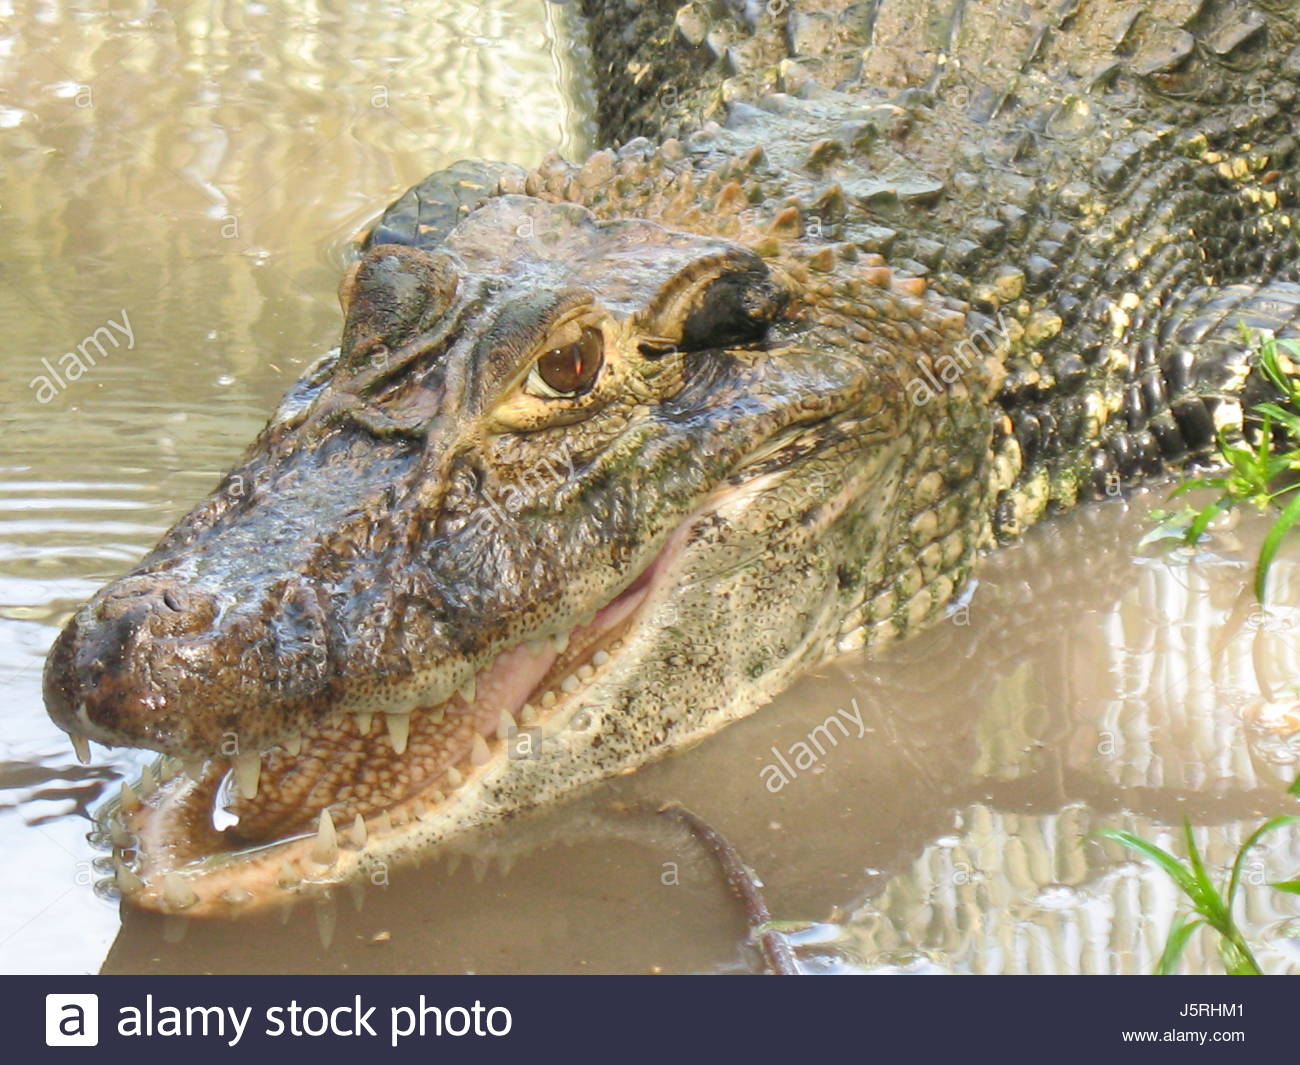 fauna teeth animals crocodile brazil south america amazon ...